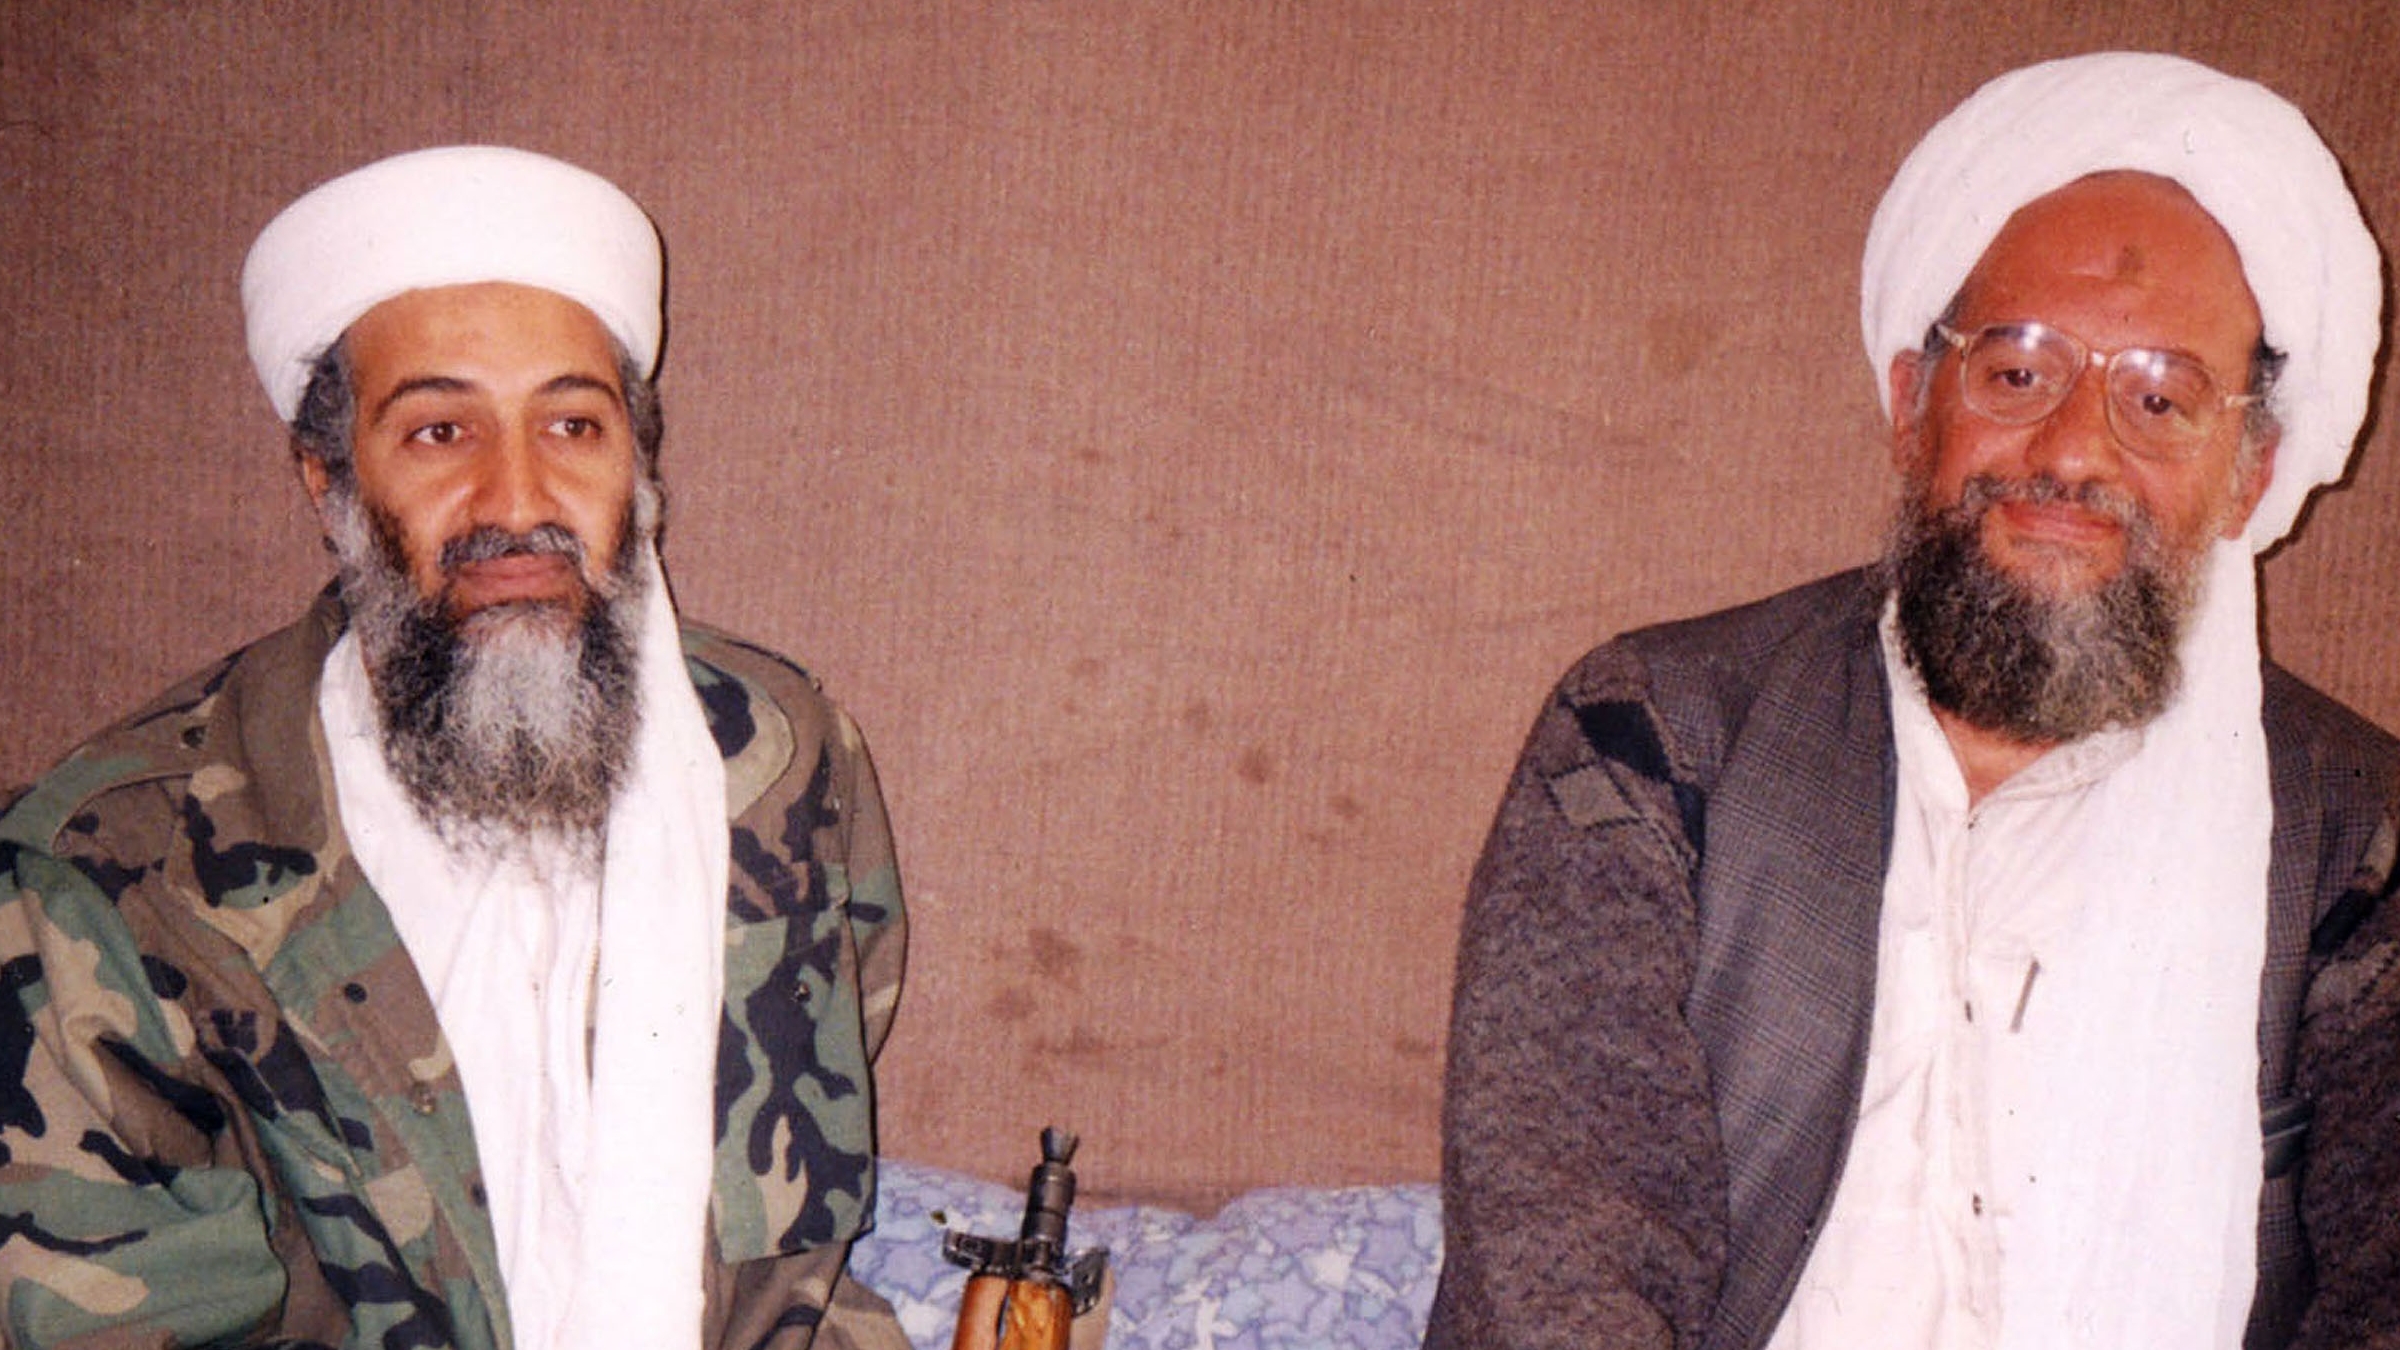 14-11-2001 Osama Bin Laden e Ayman Al-Zawahiri Politica dell'Asia Afghanistan International Visual News